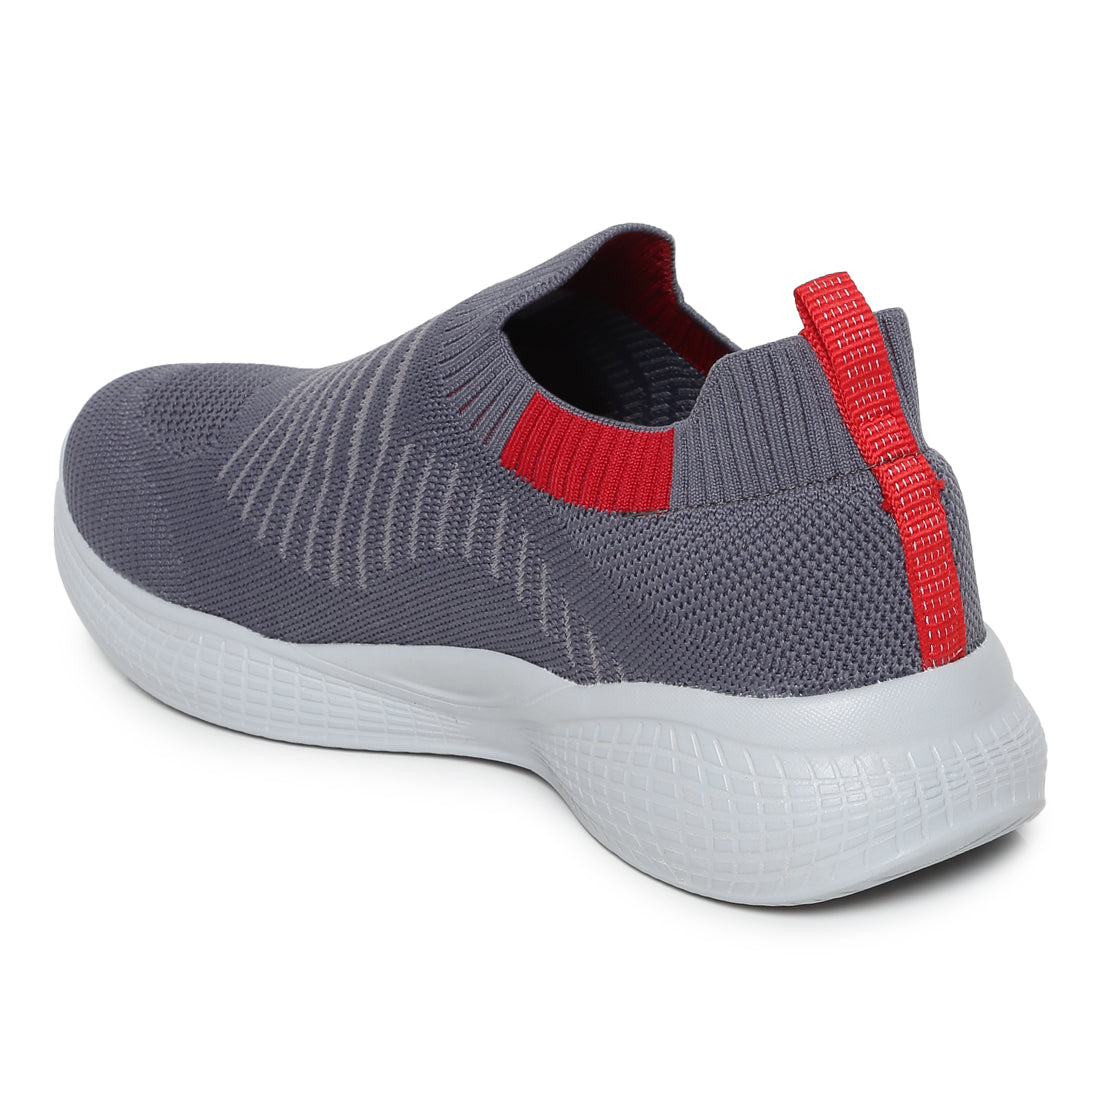 Eeken Dark Grey - Red Athleisure Shoes for Men